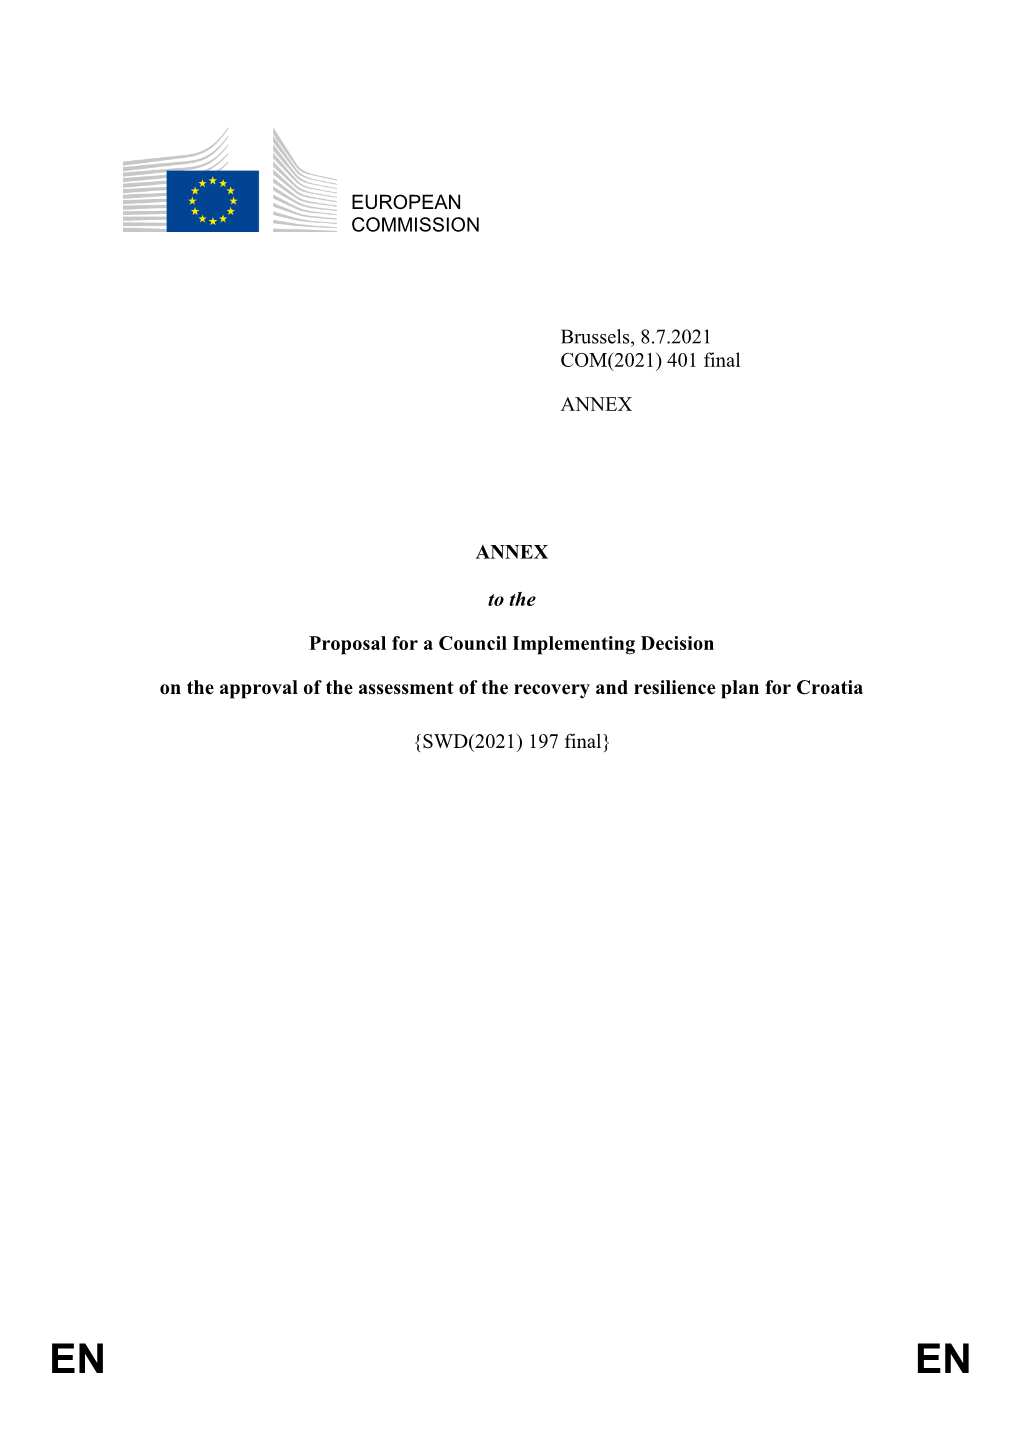 EUROPEAN COMMISSION Brussels, 8.7.2021 COM(2021) 401 Final